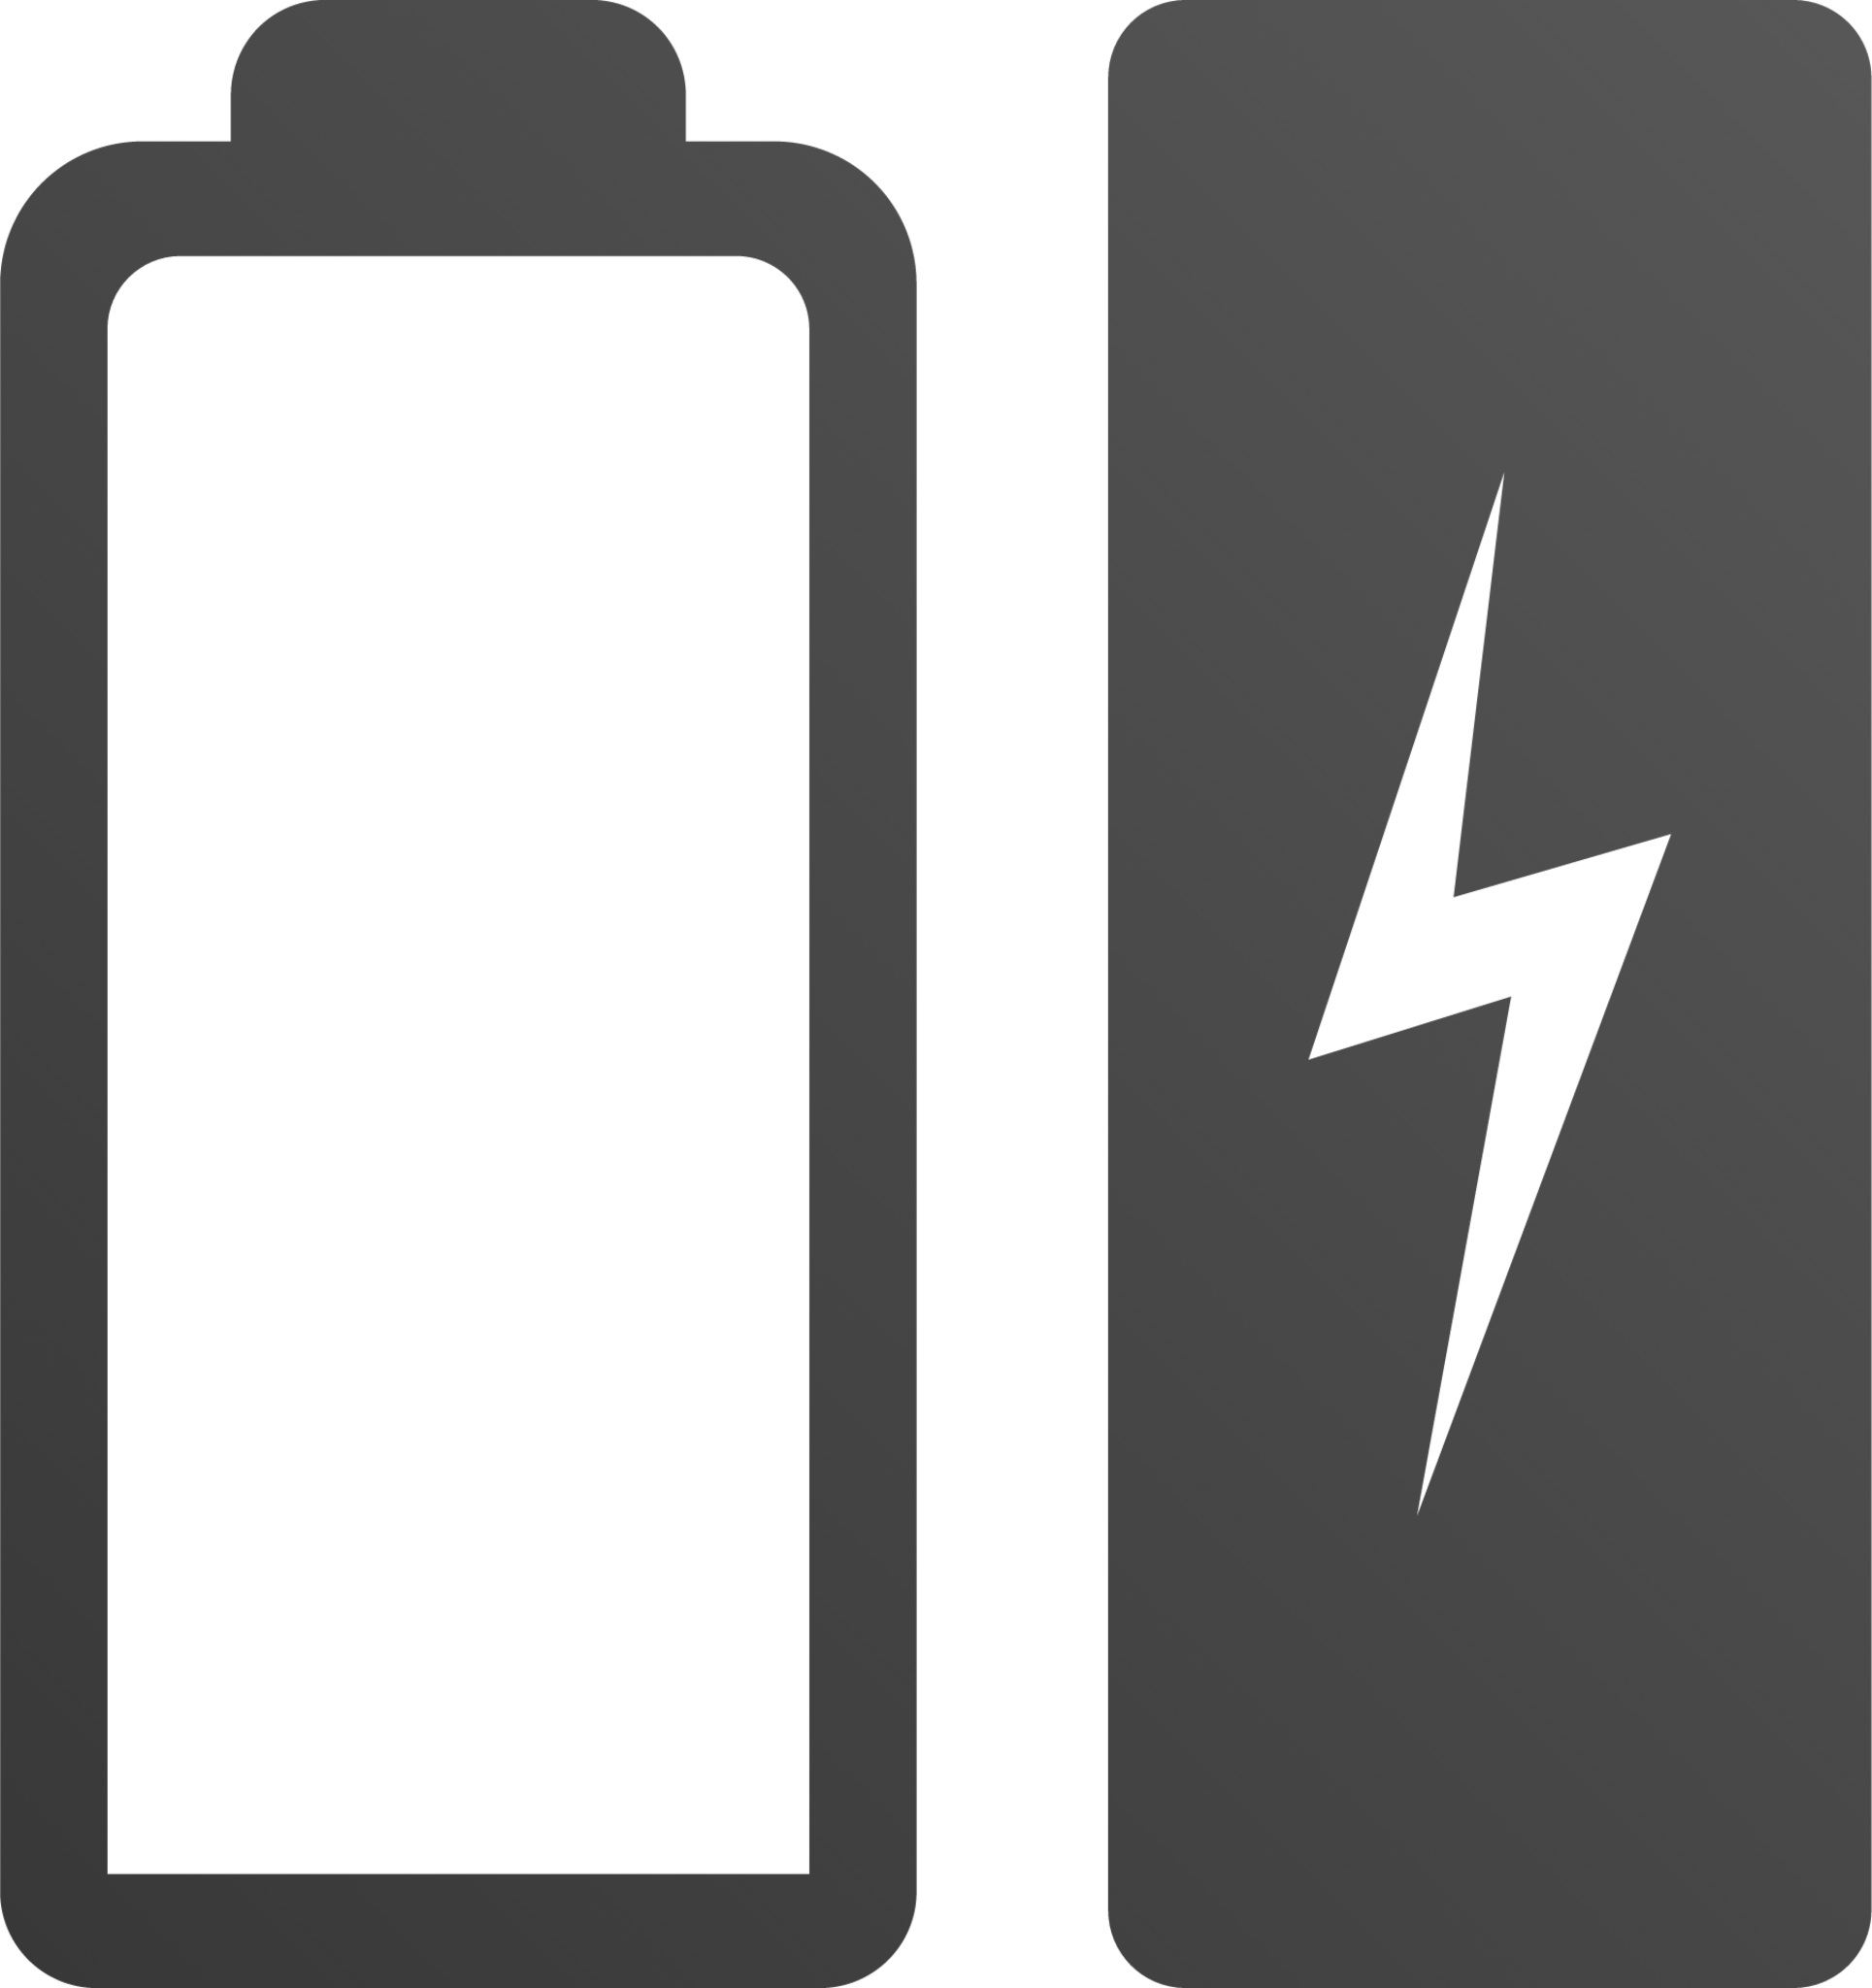 xfpm ups 000 charging icon